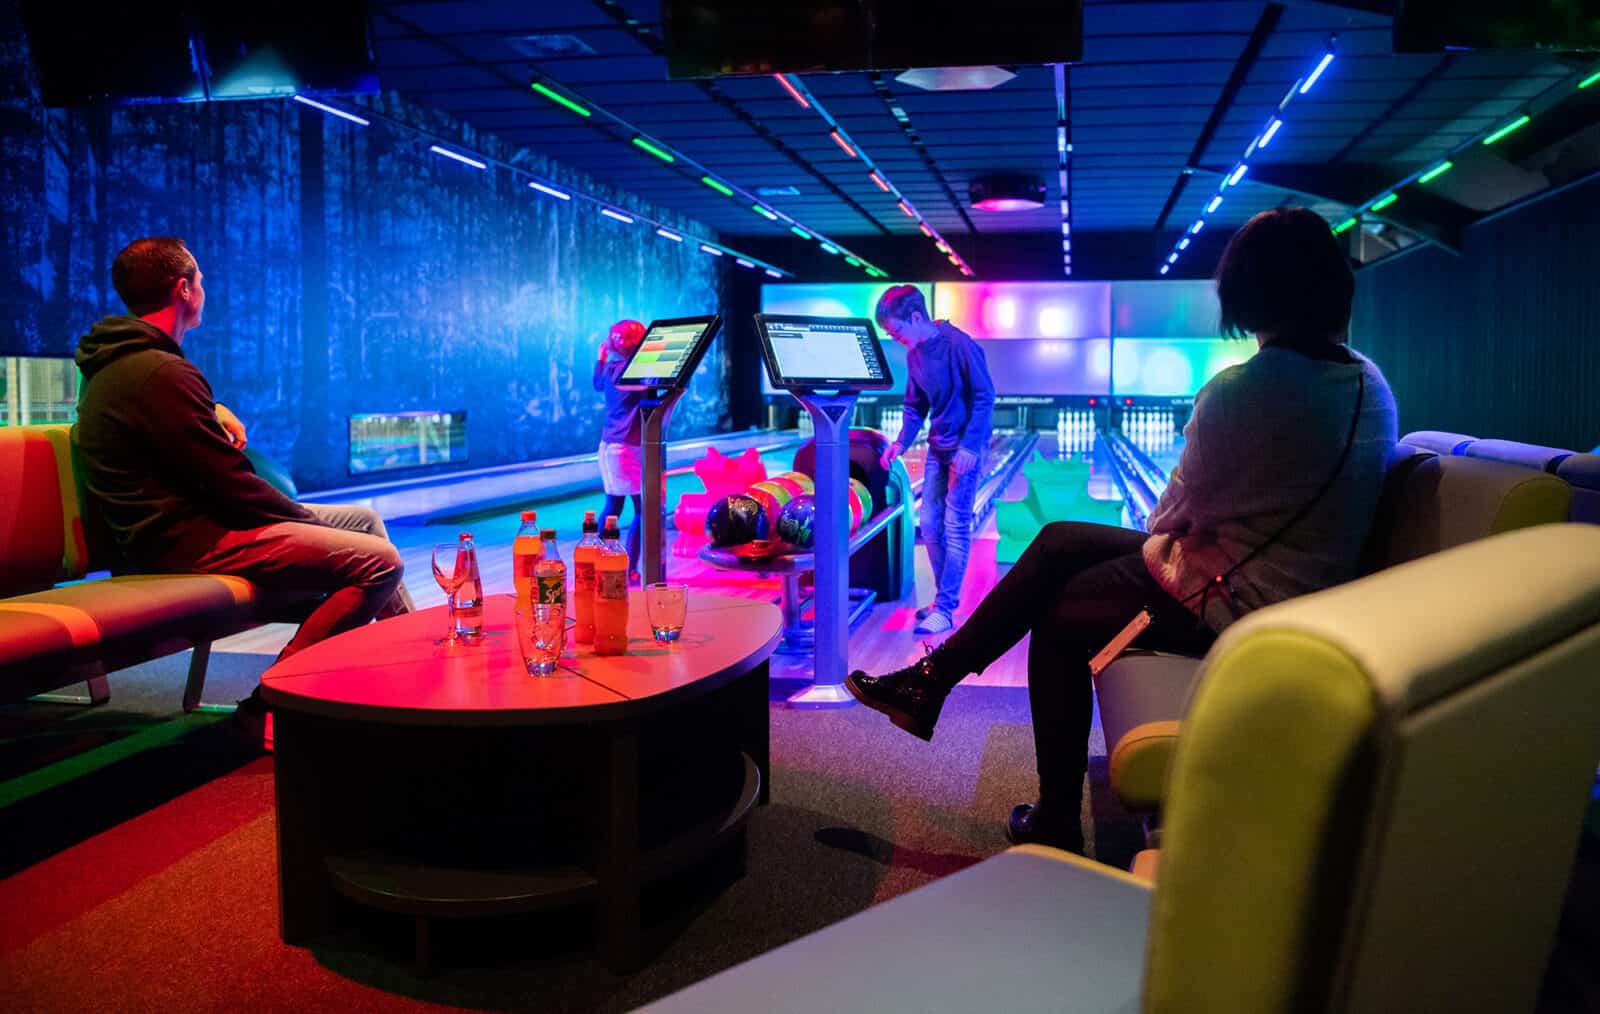 rhoen-park-aktiv-resort-bowling-im-wald-familien-300dpi